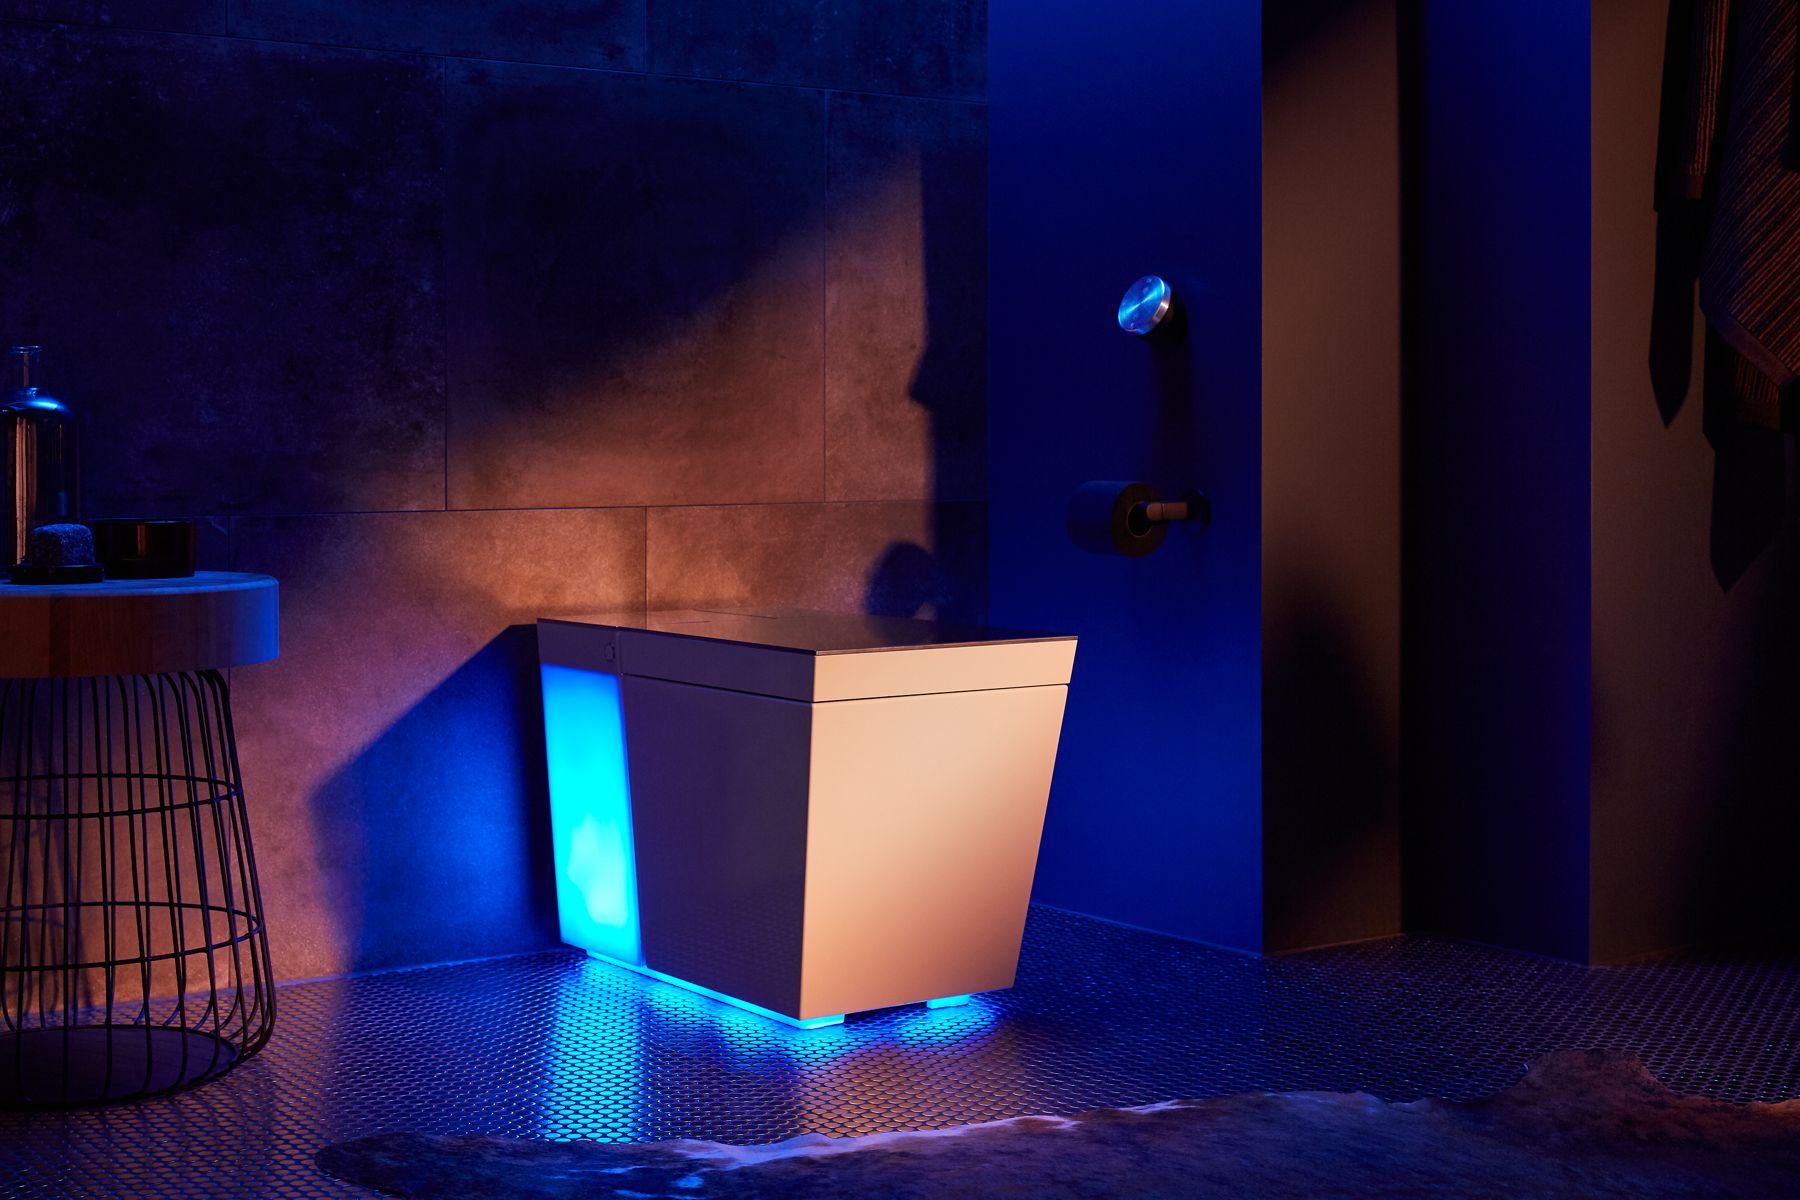 Kohler’s Numi 2.0 Intelligent Toilet Named as CES 2020 Innovation Awards Honoree